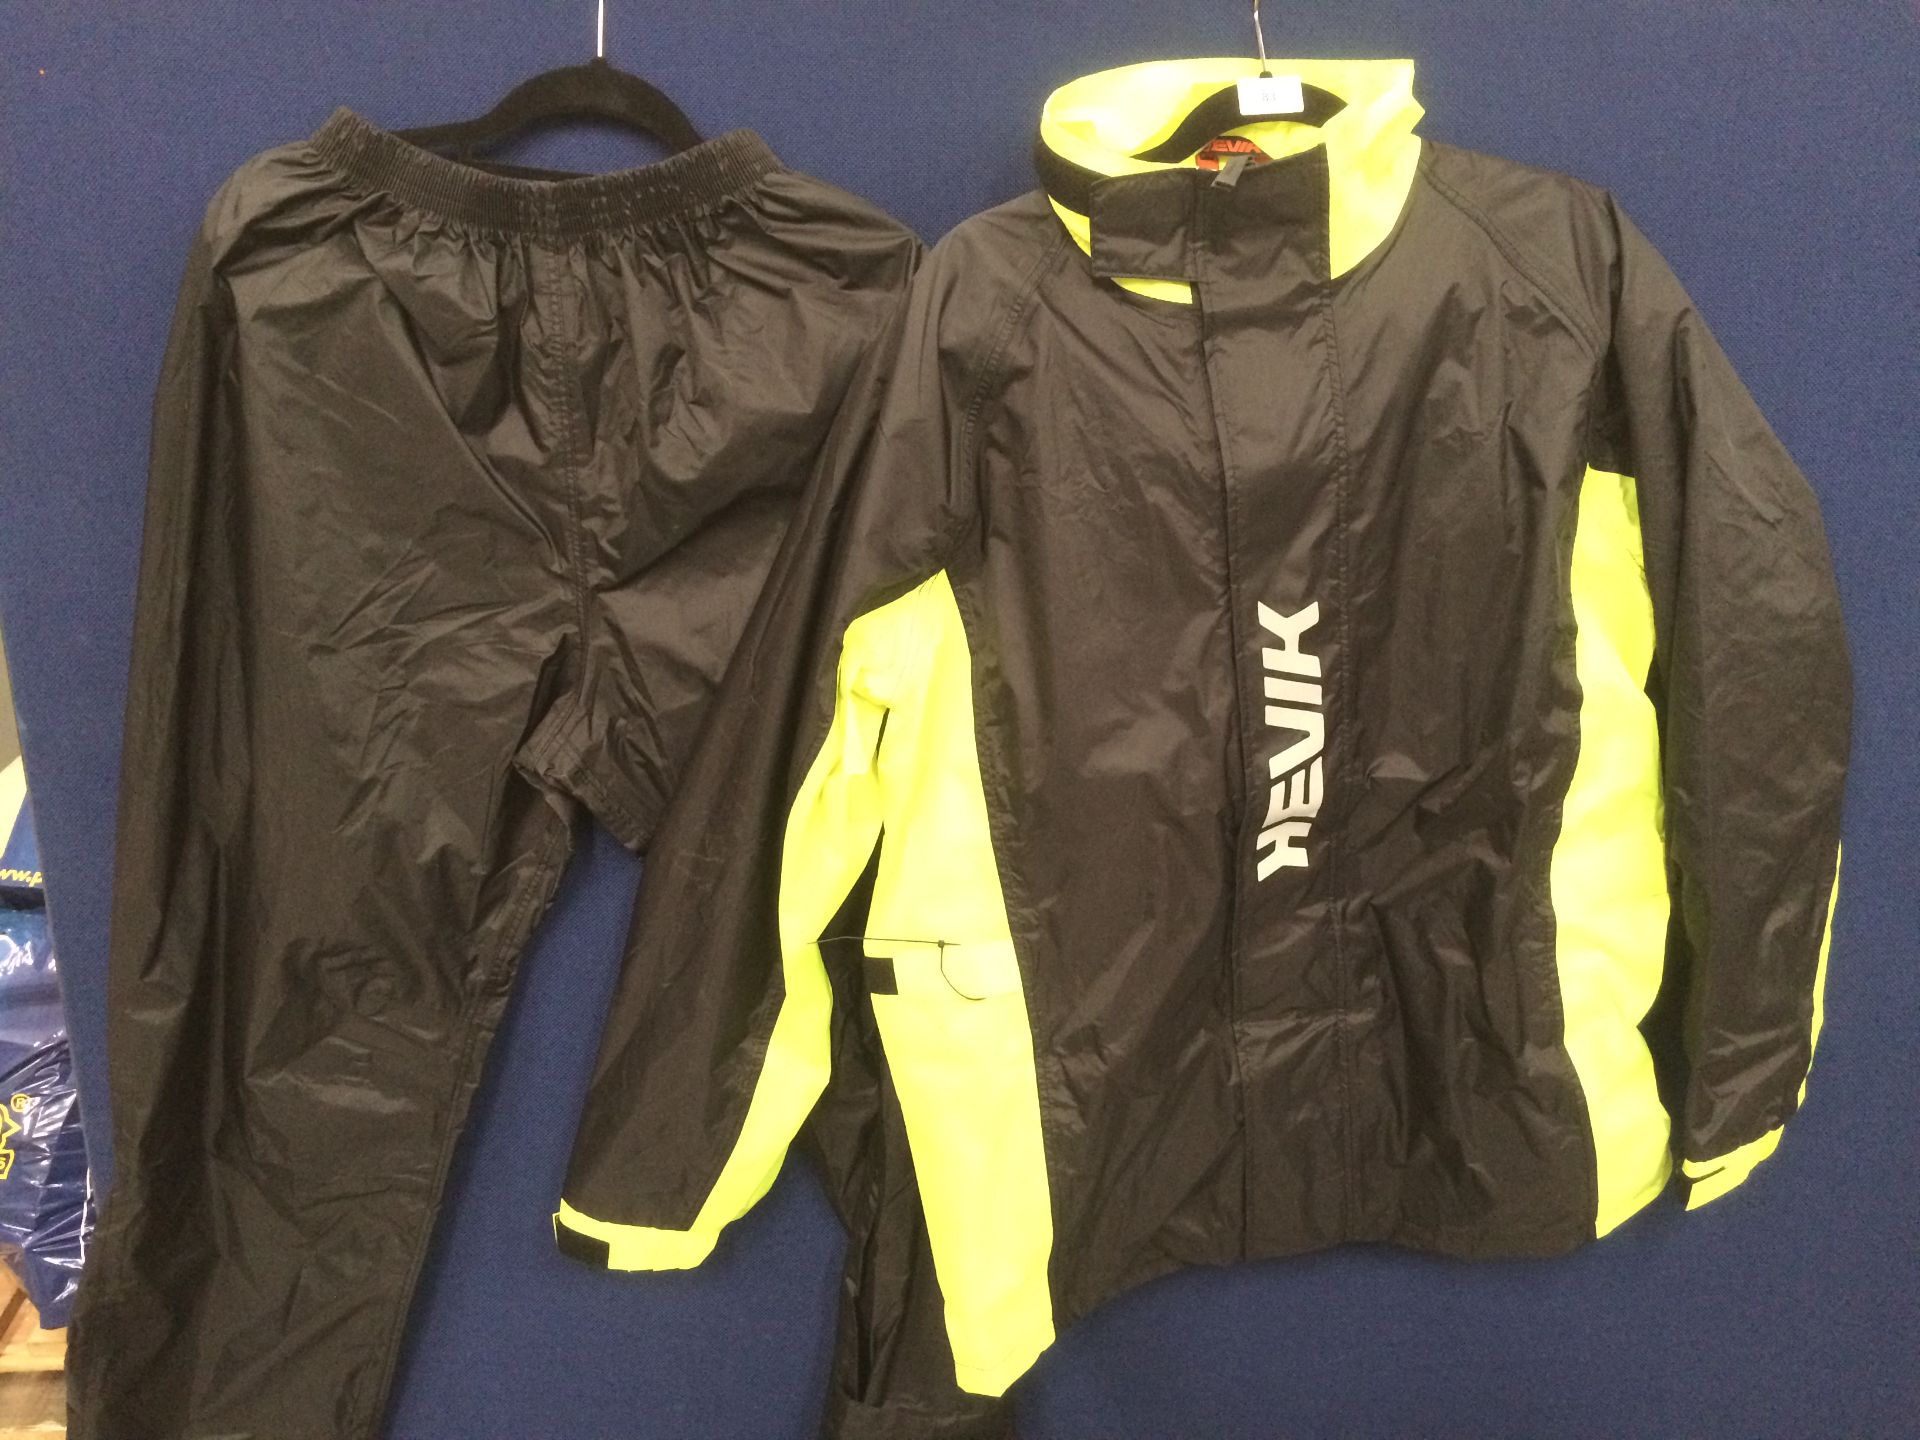 2 piece waterproof suit by Hevik in black/yellow - size M